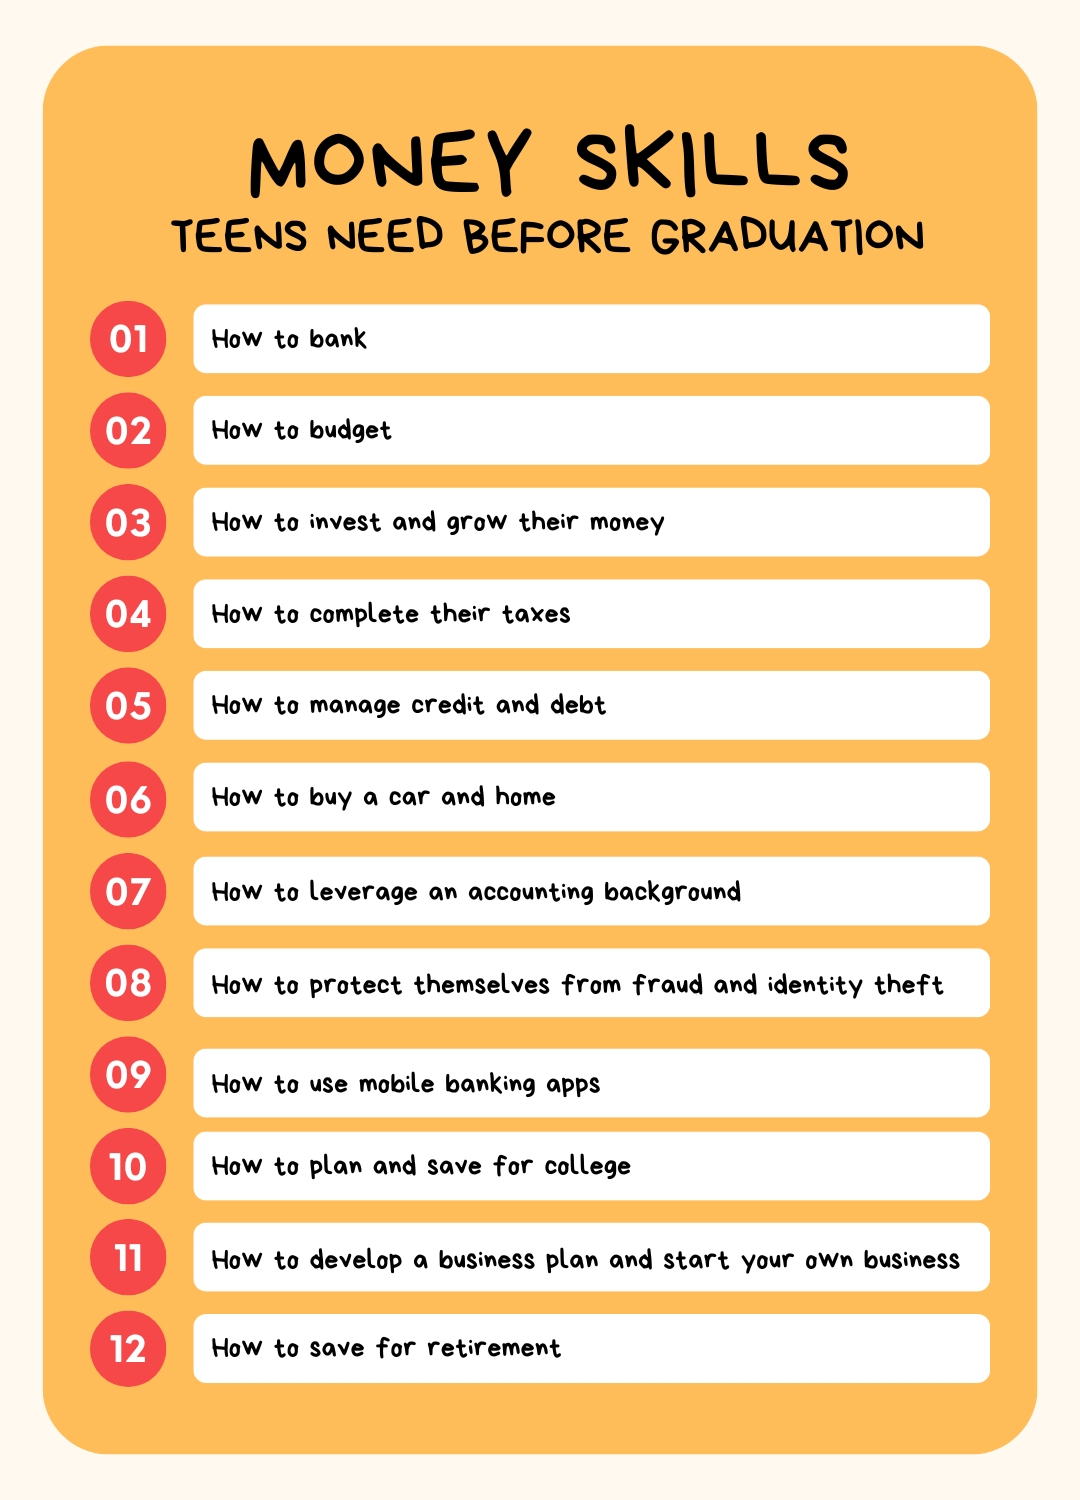 Money skills teens need before graduation.